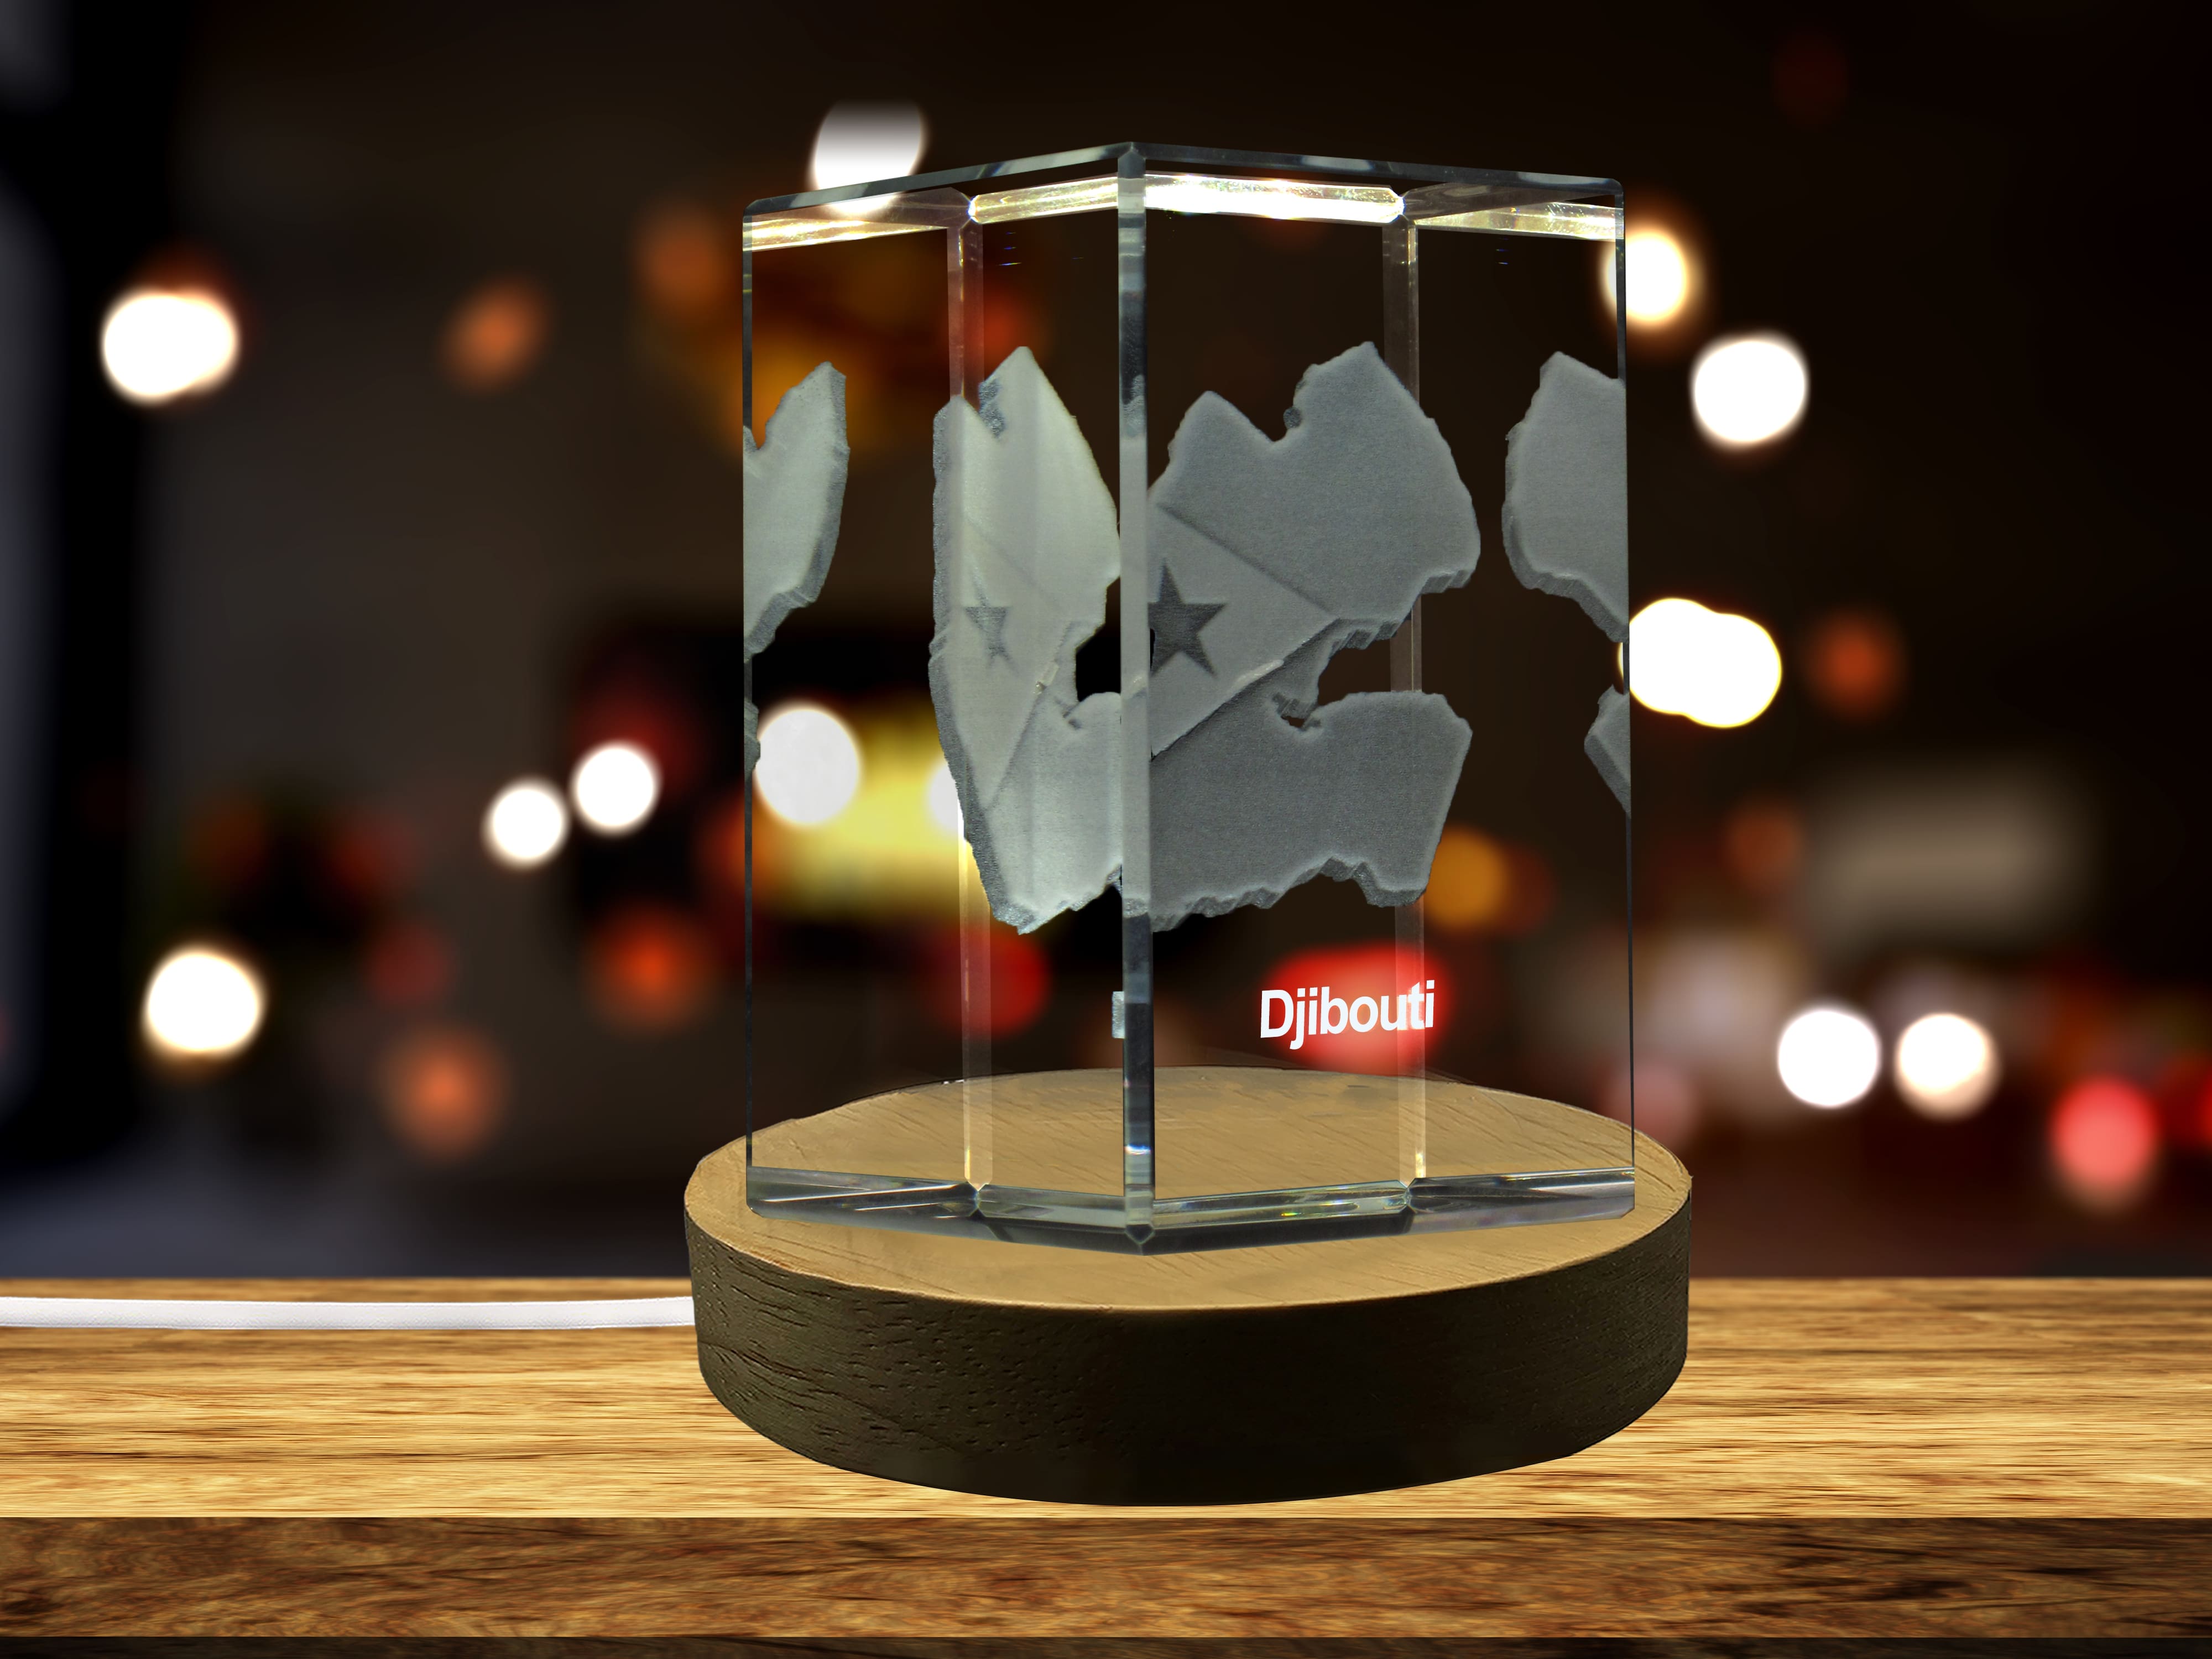 Djibouti 3D Engraved Crystal 3D Engraved Crystal Keepsake/Gift/Decor/Collectible/Souvenir A&B Crystal Collection